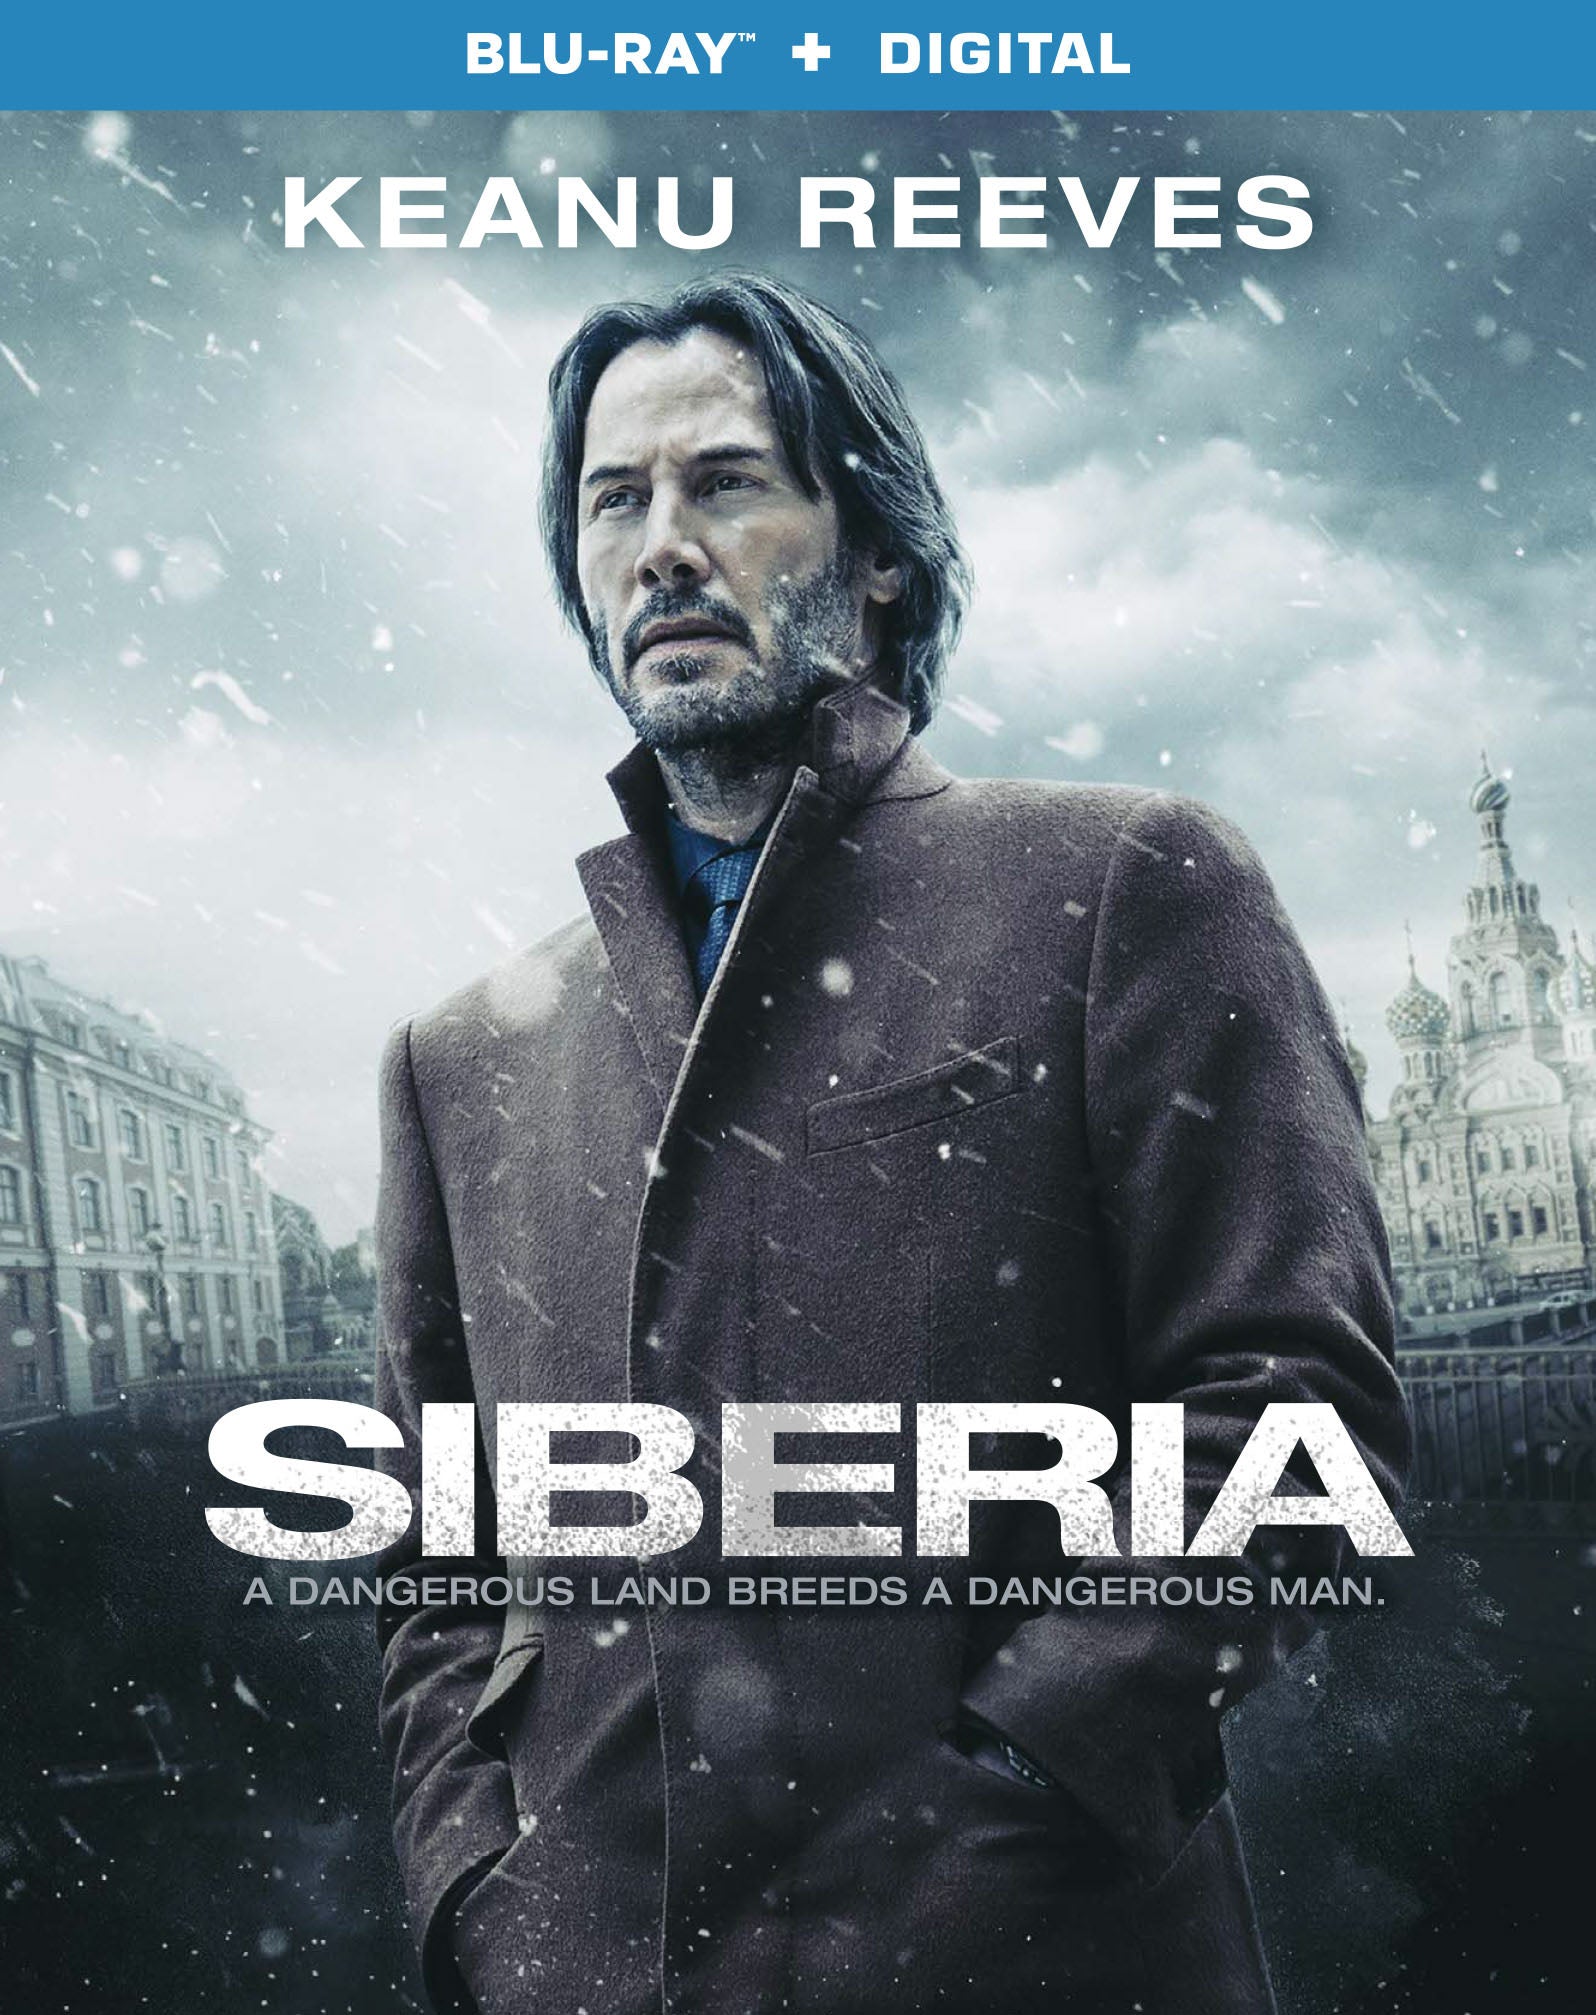 Siberia [Blu-ray] cover art